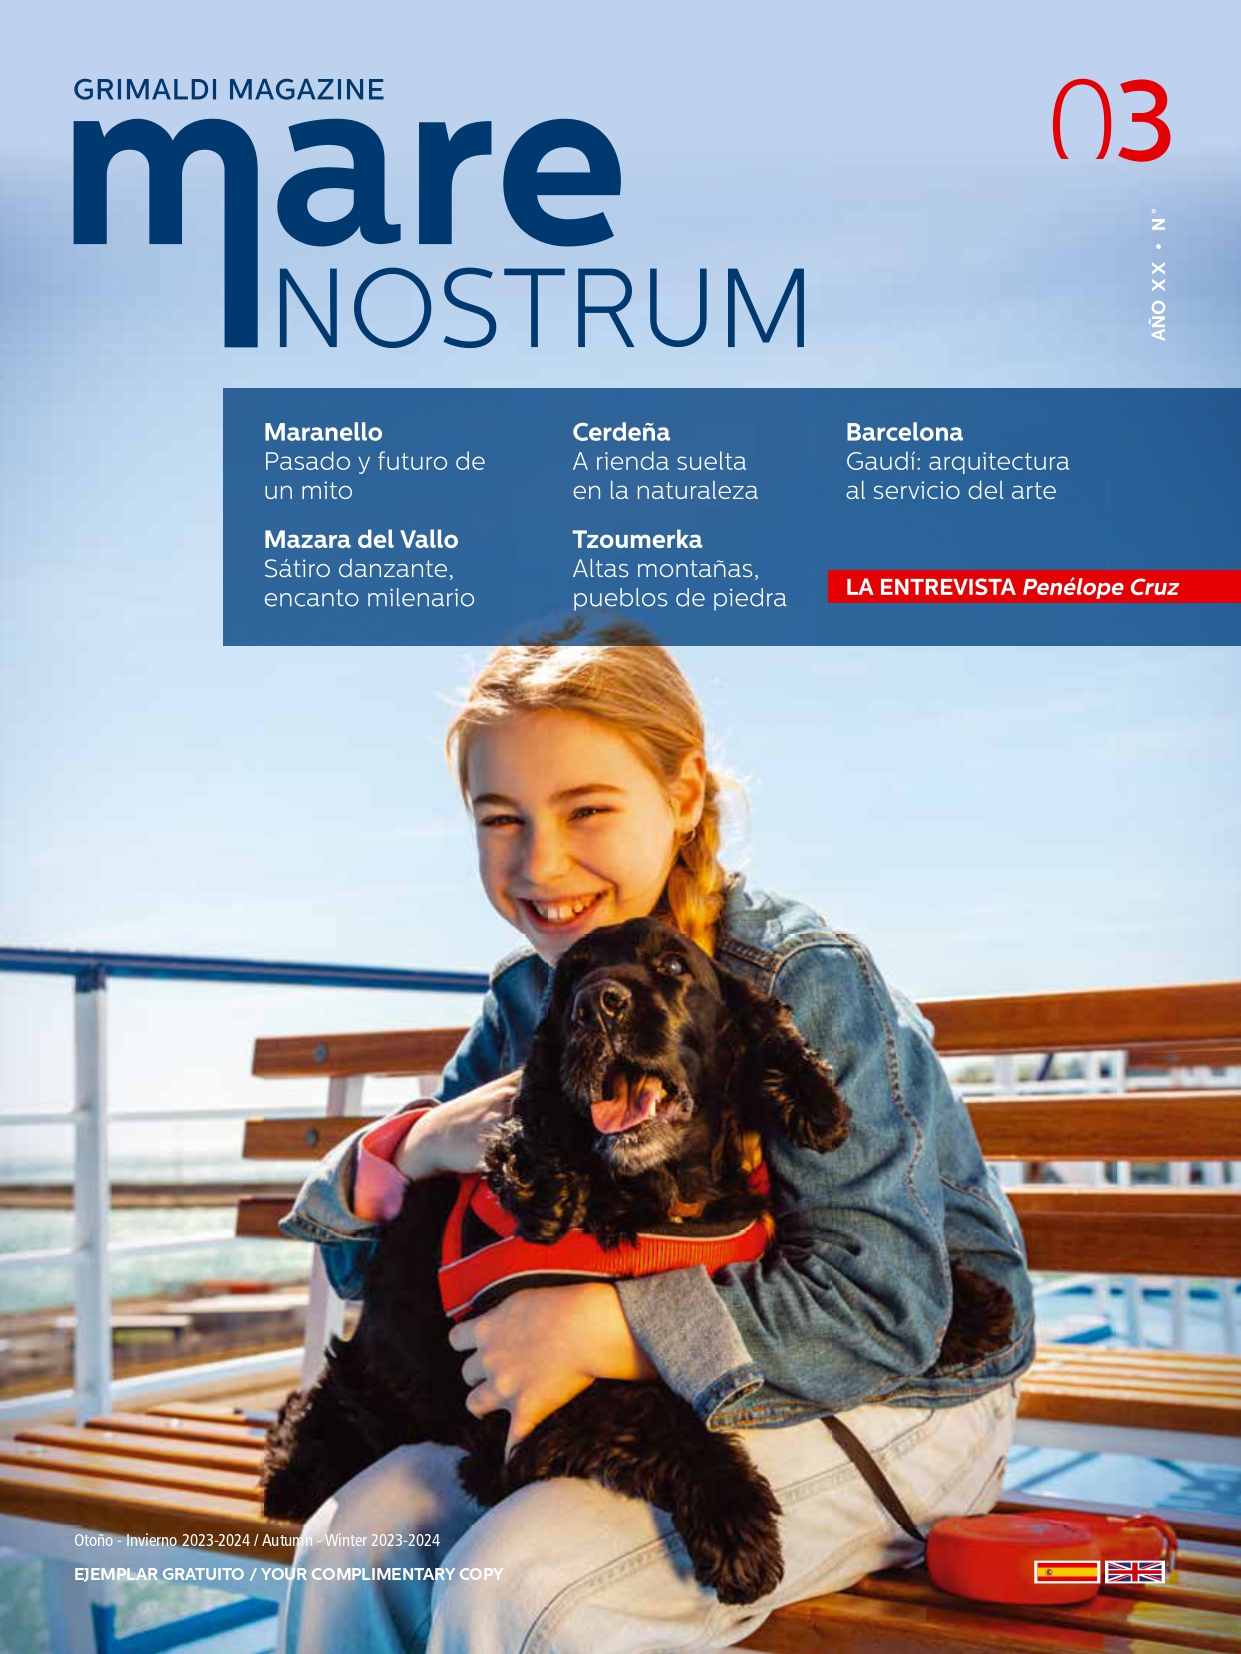 Grimaldi Magazine Mare Nostrum (Anno XX n. 3) Spagnolo-Inglese